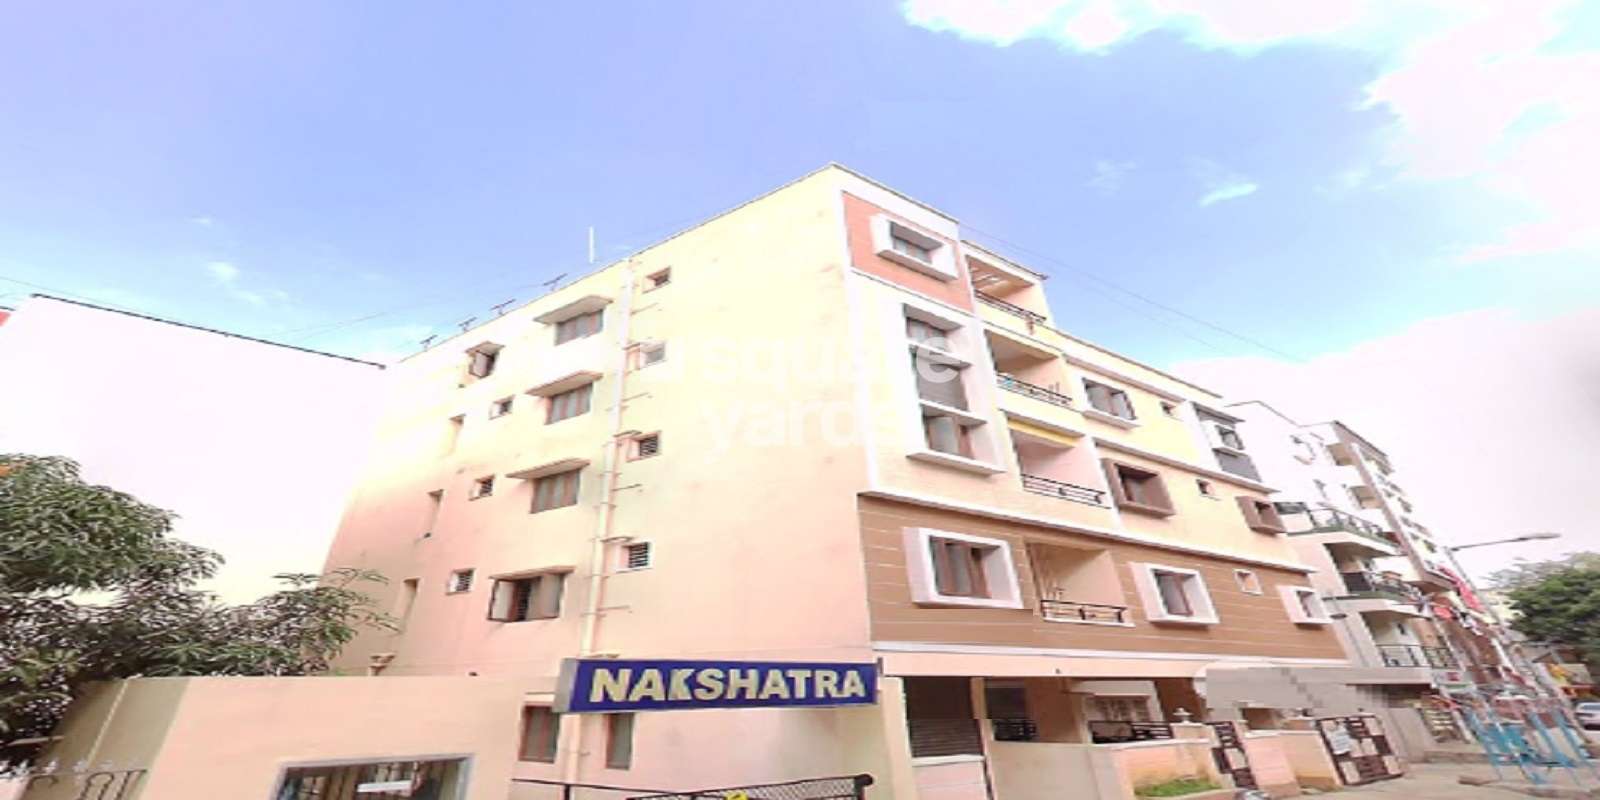 Nakshatra Apartments Cover Image